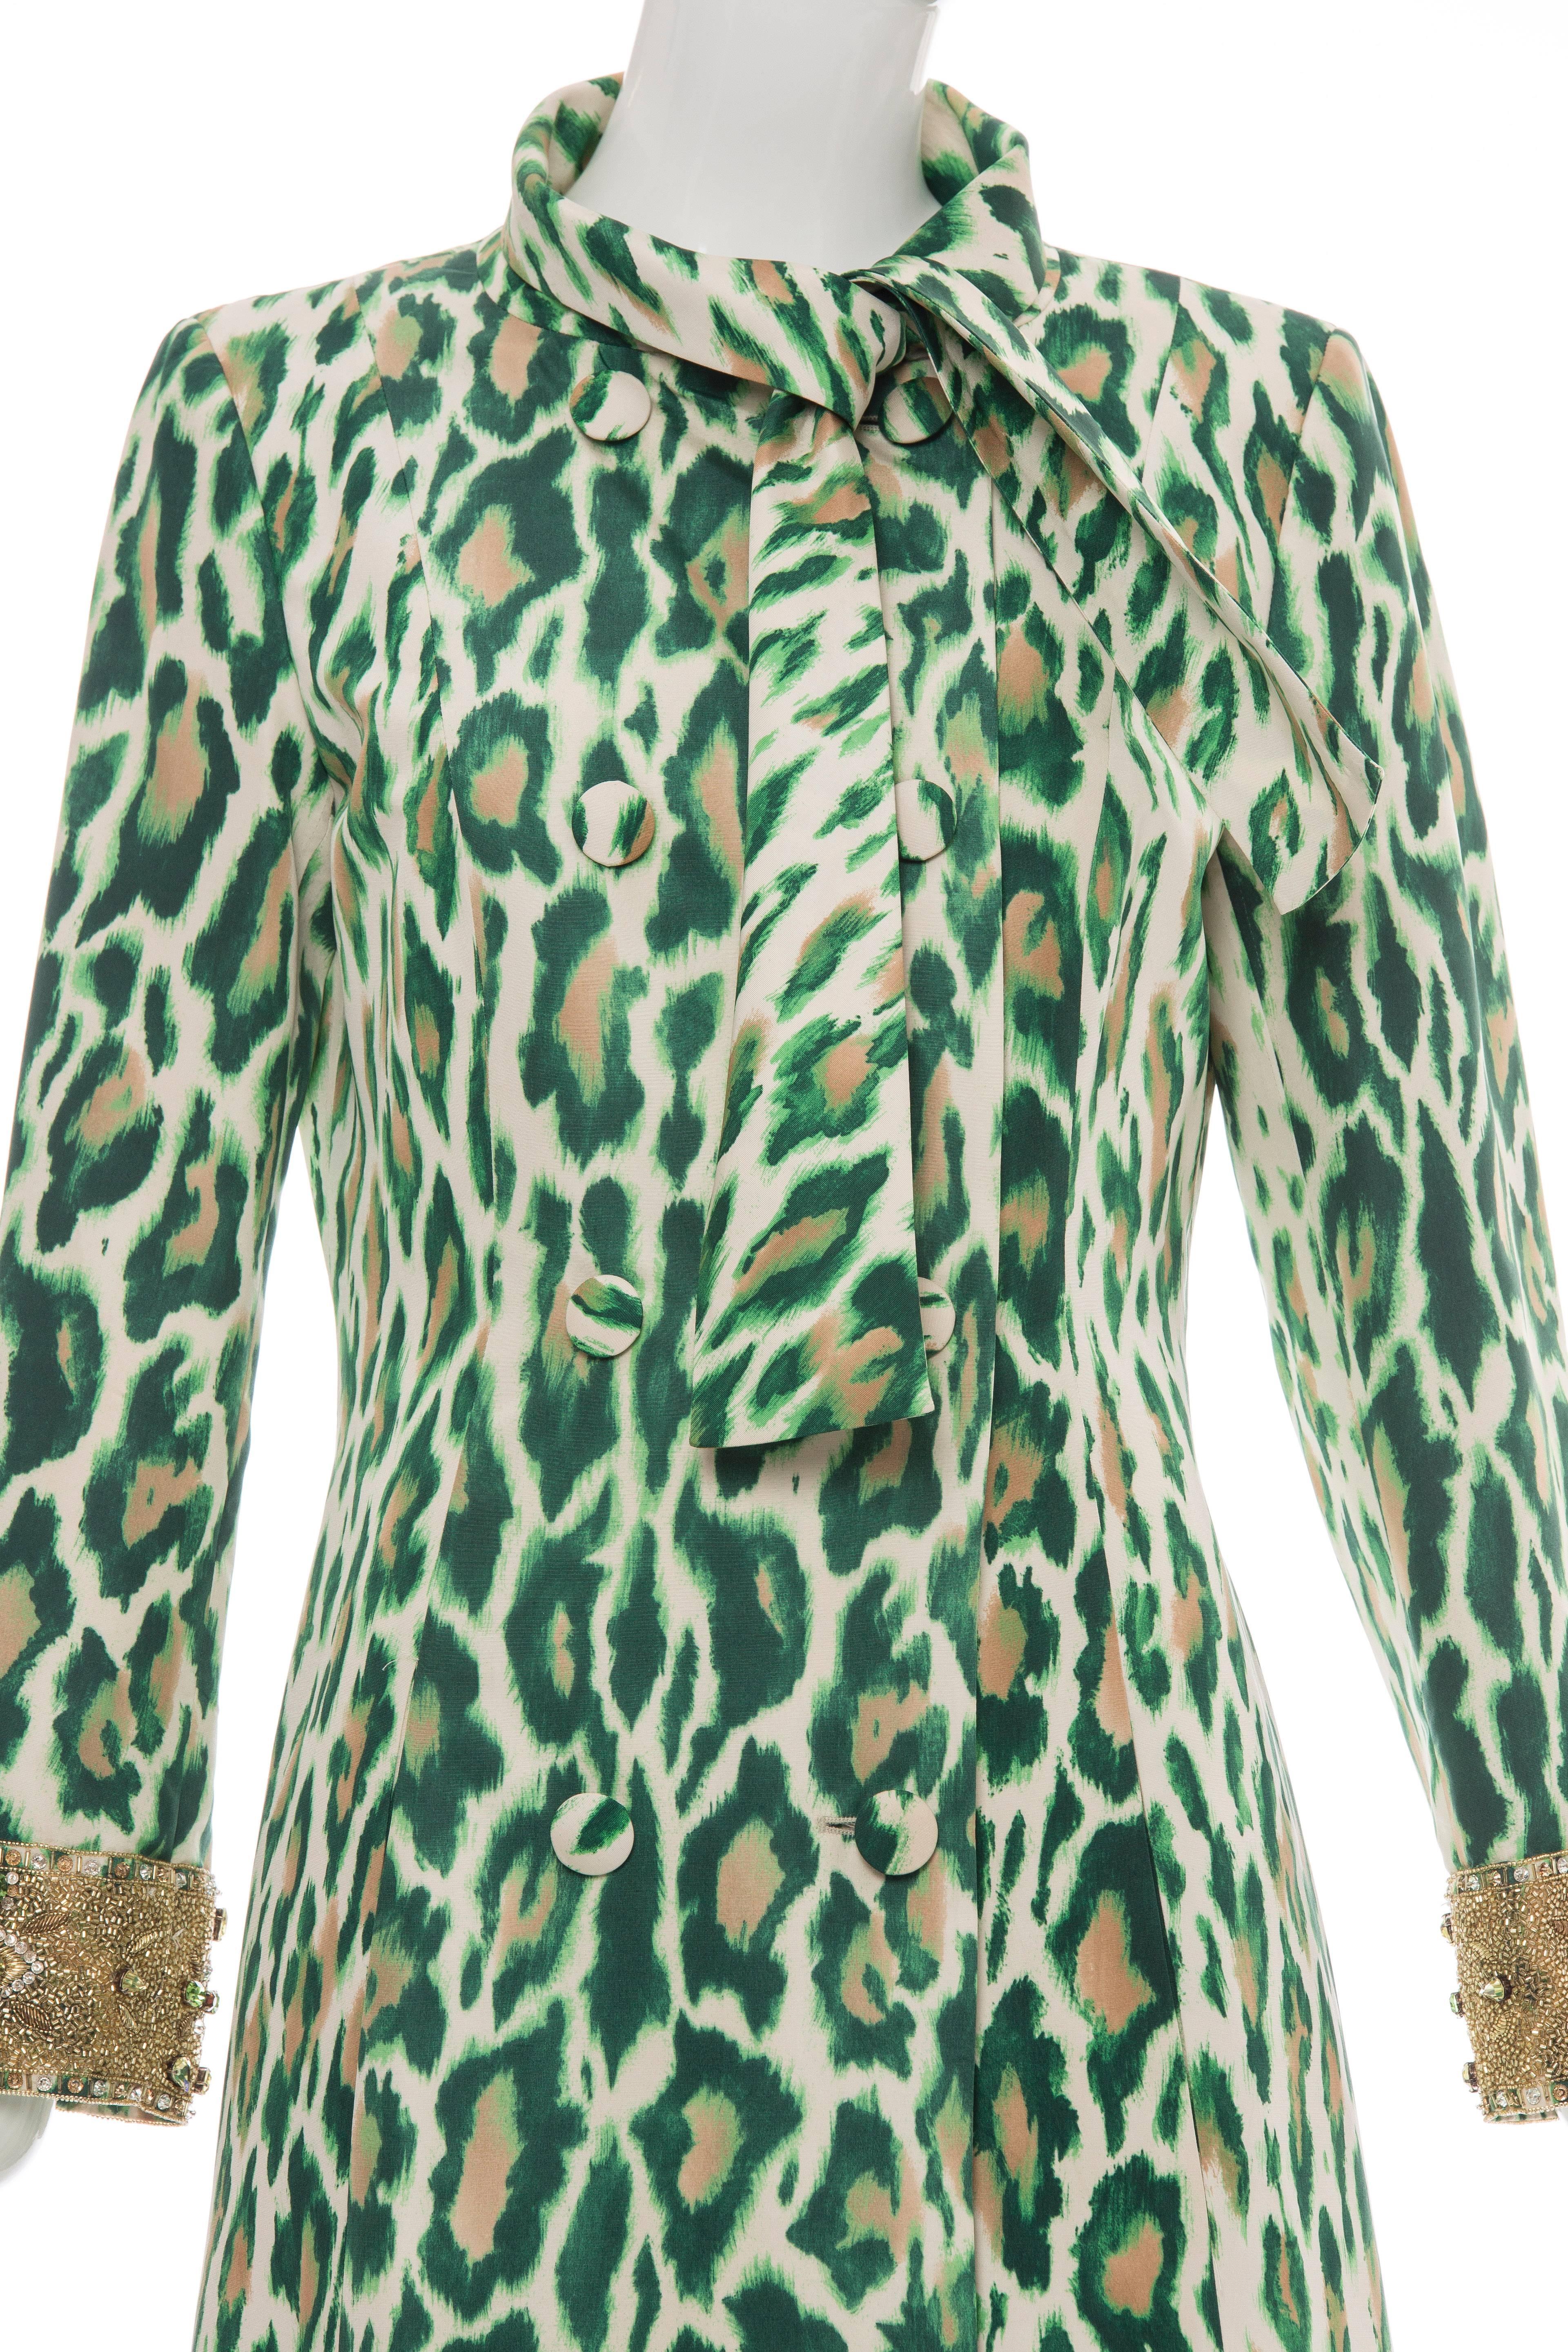 Women's Christian Dior By John Galliano Silk Embellished Leopard Coat, Resort 2008 